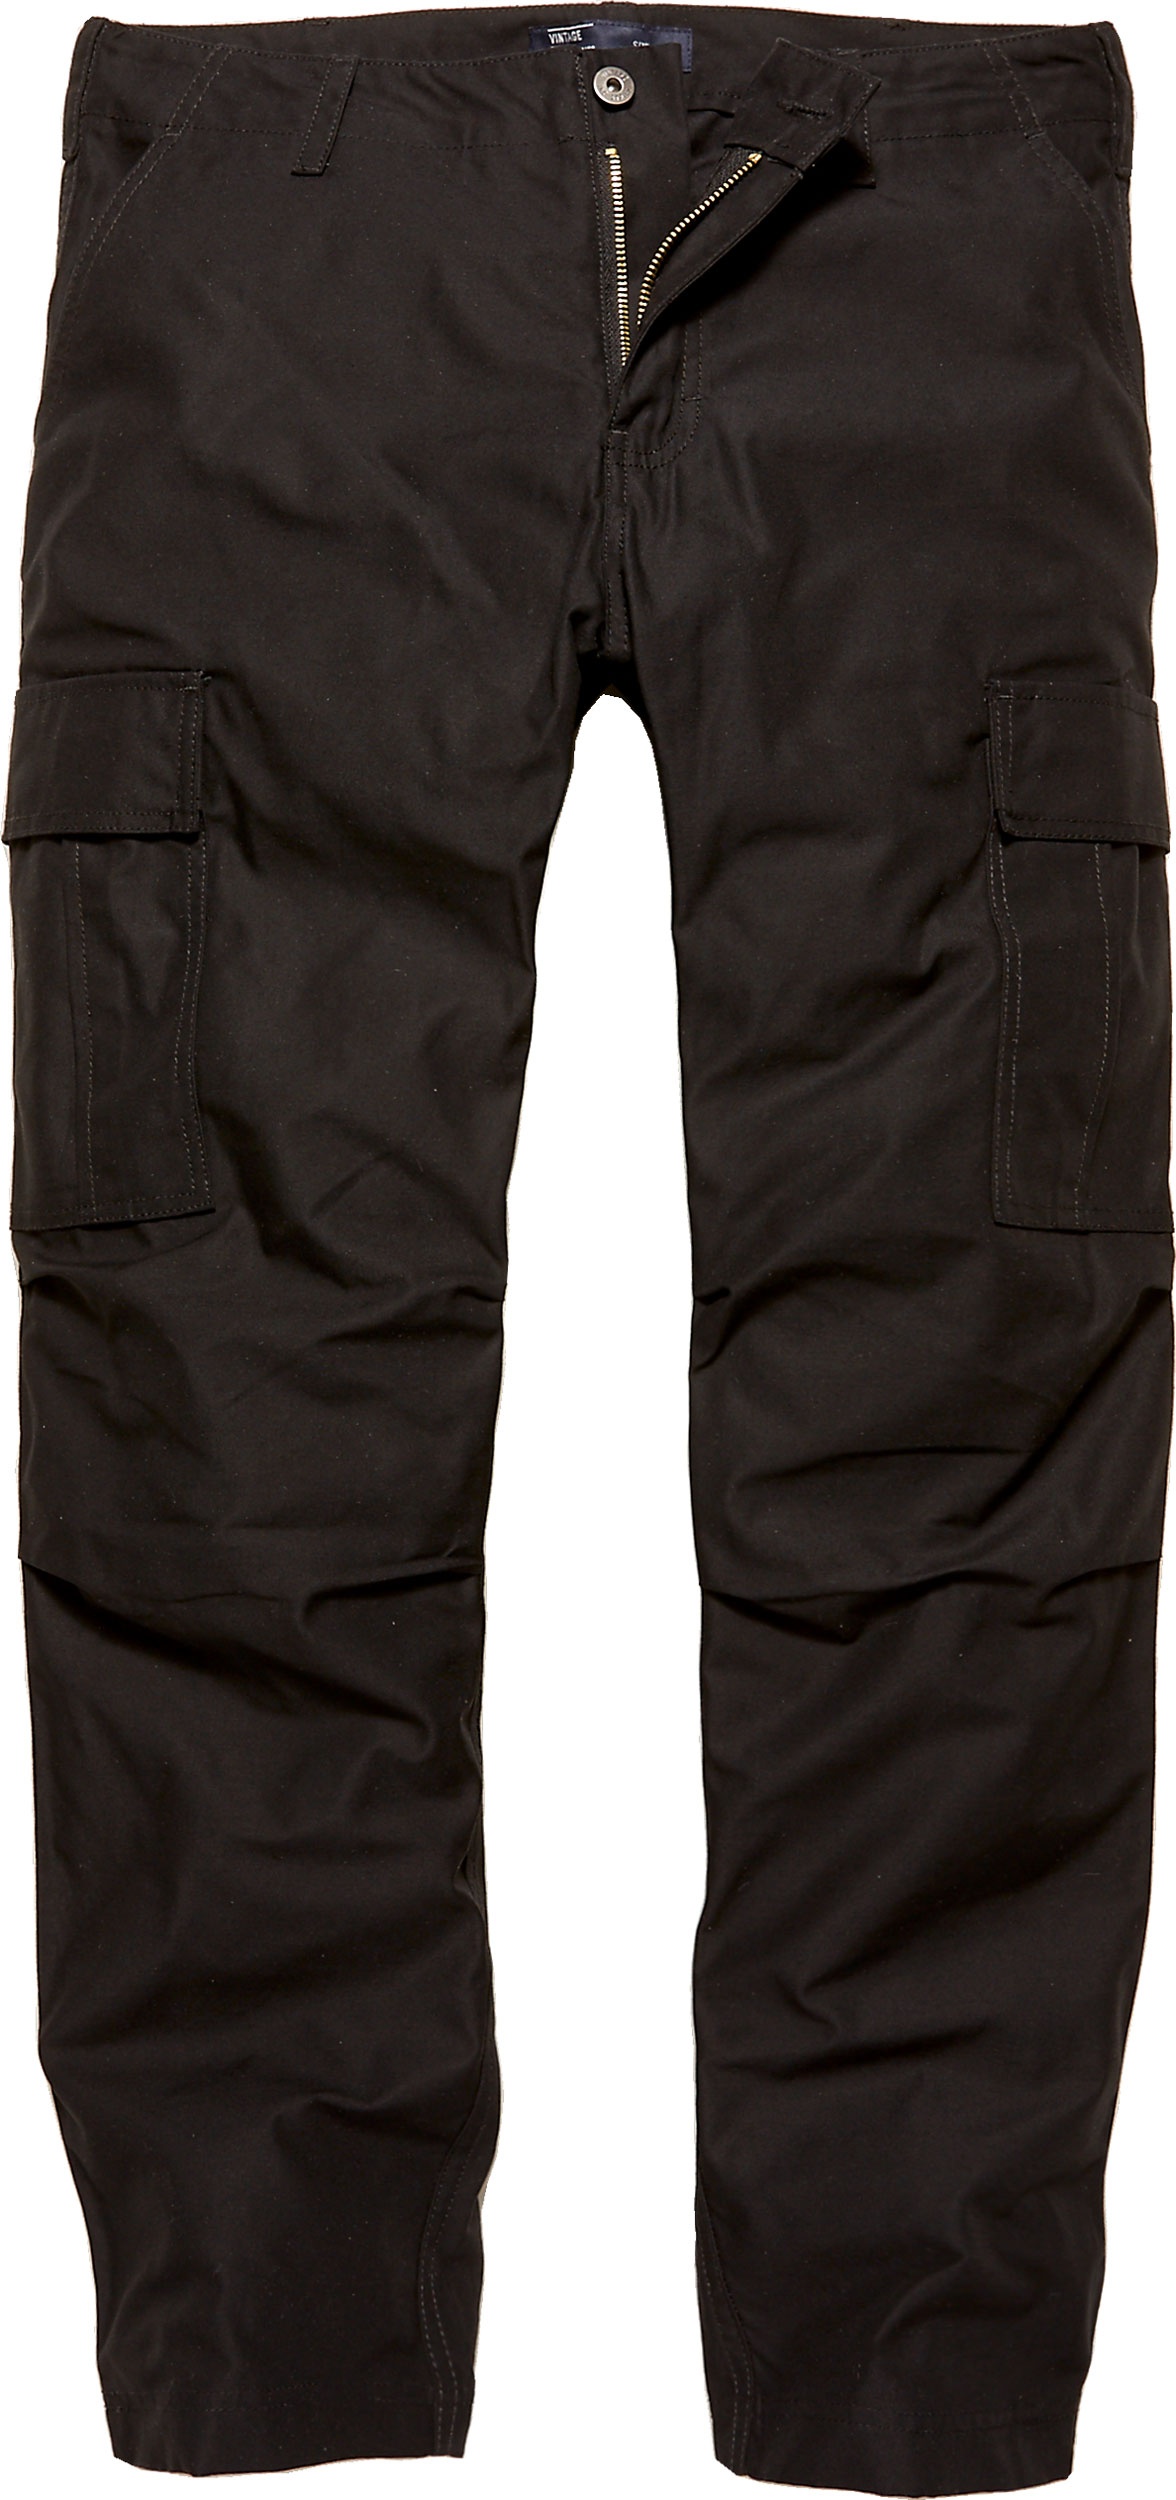 Vintage Industries Owen, pantalon cargo - Noir - XL